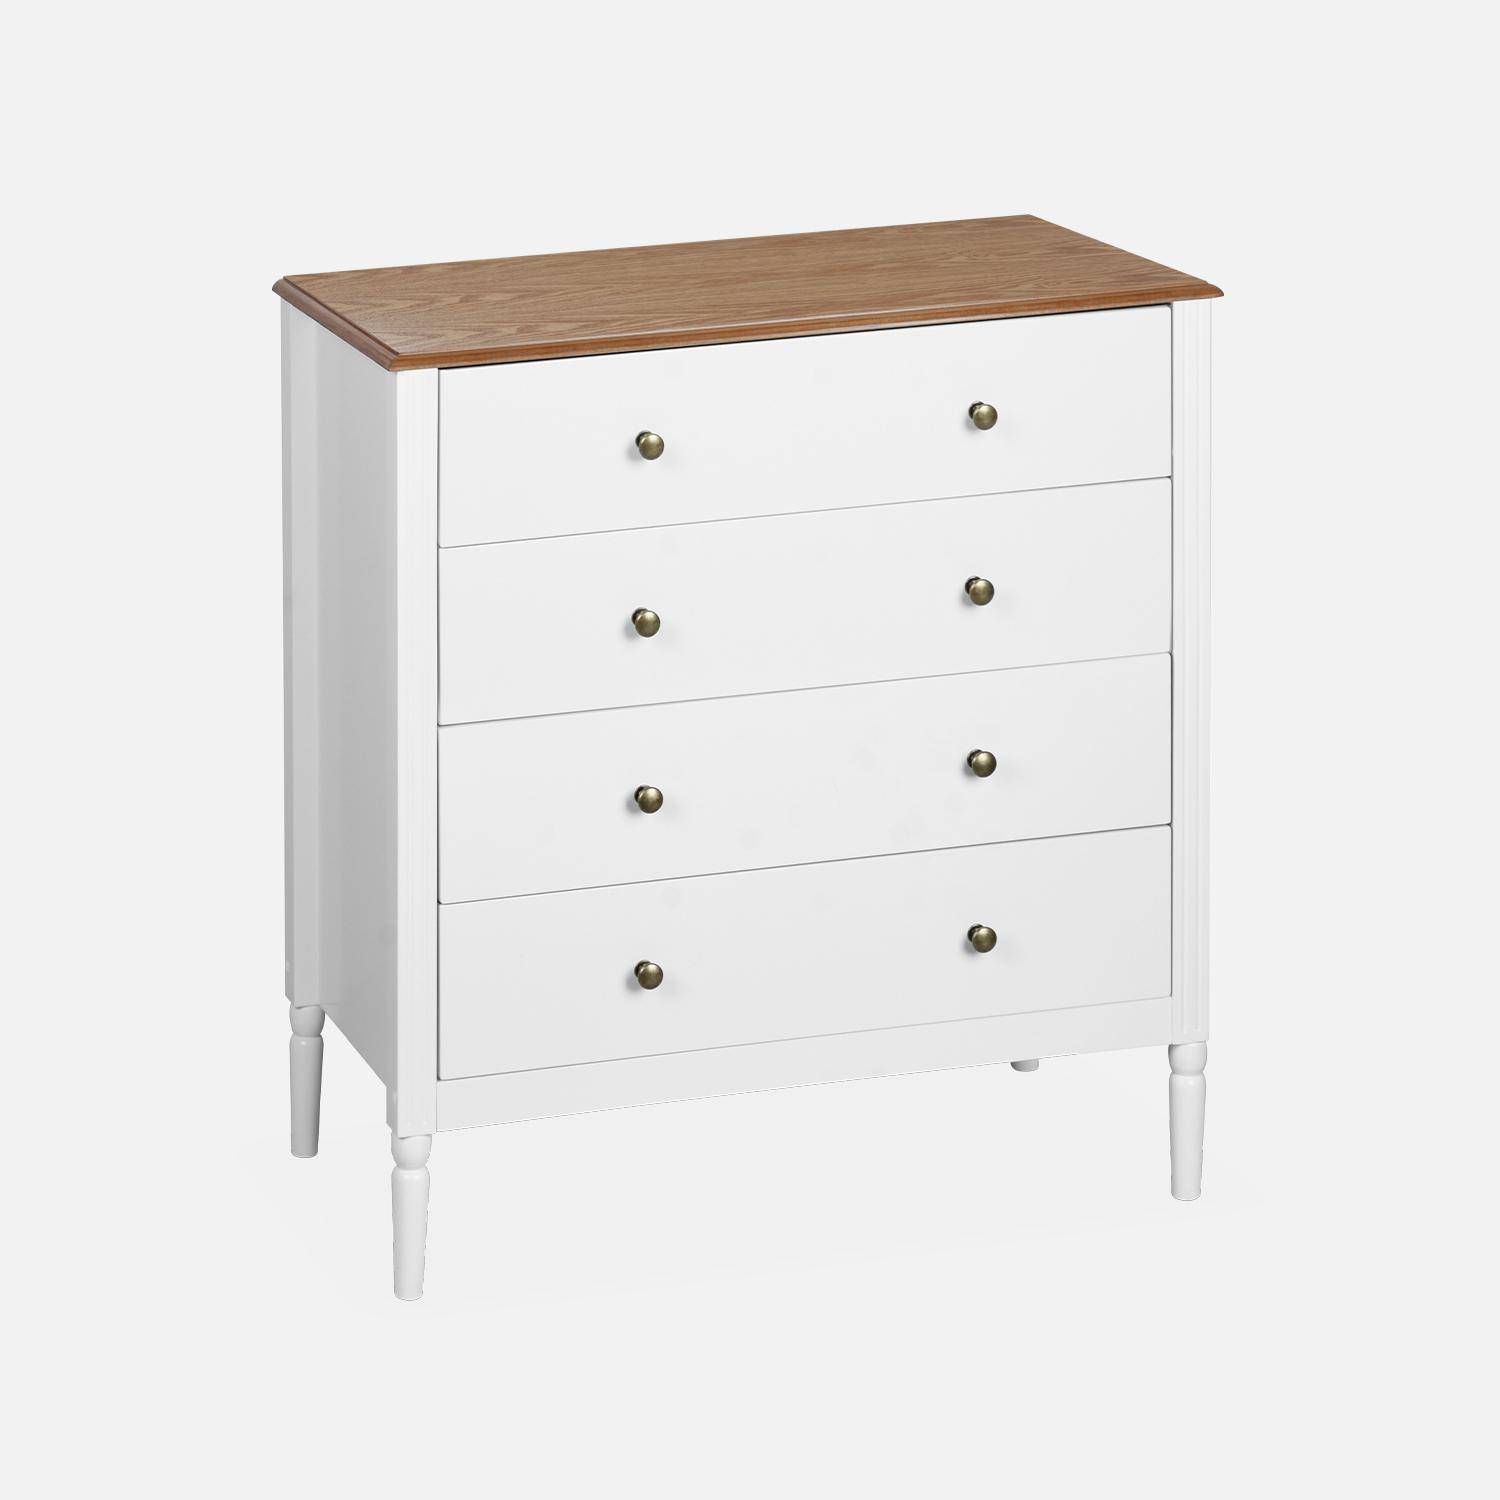 4-drawer chest with pinewood legs, 80x40x85cm, Celeste, White,sweeek,Photo3